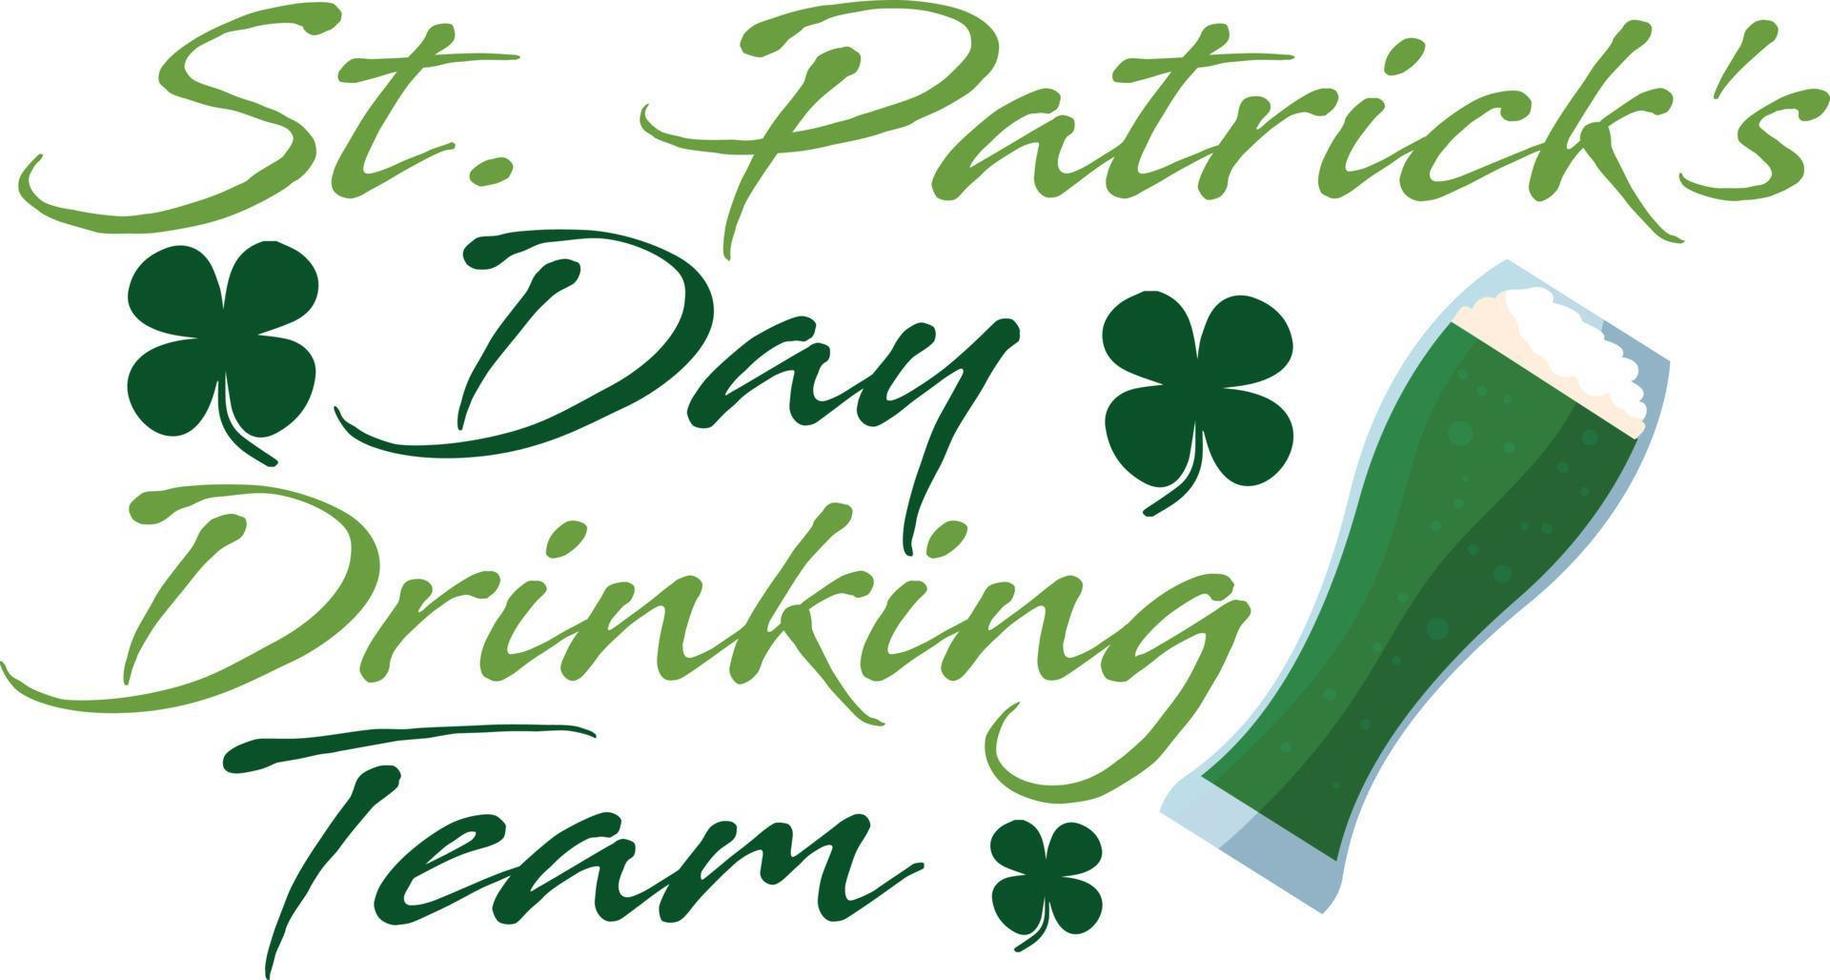 st patrick's day t shirt design,St. Patricks Day SVG ,lettering st. patrick's day, tshirt design, vector